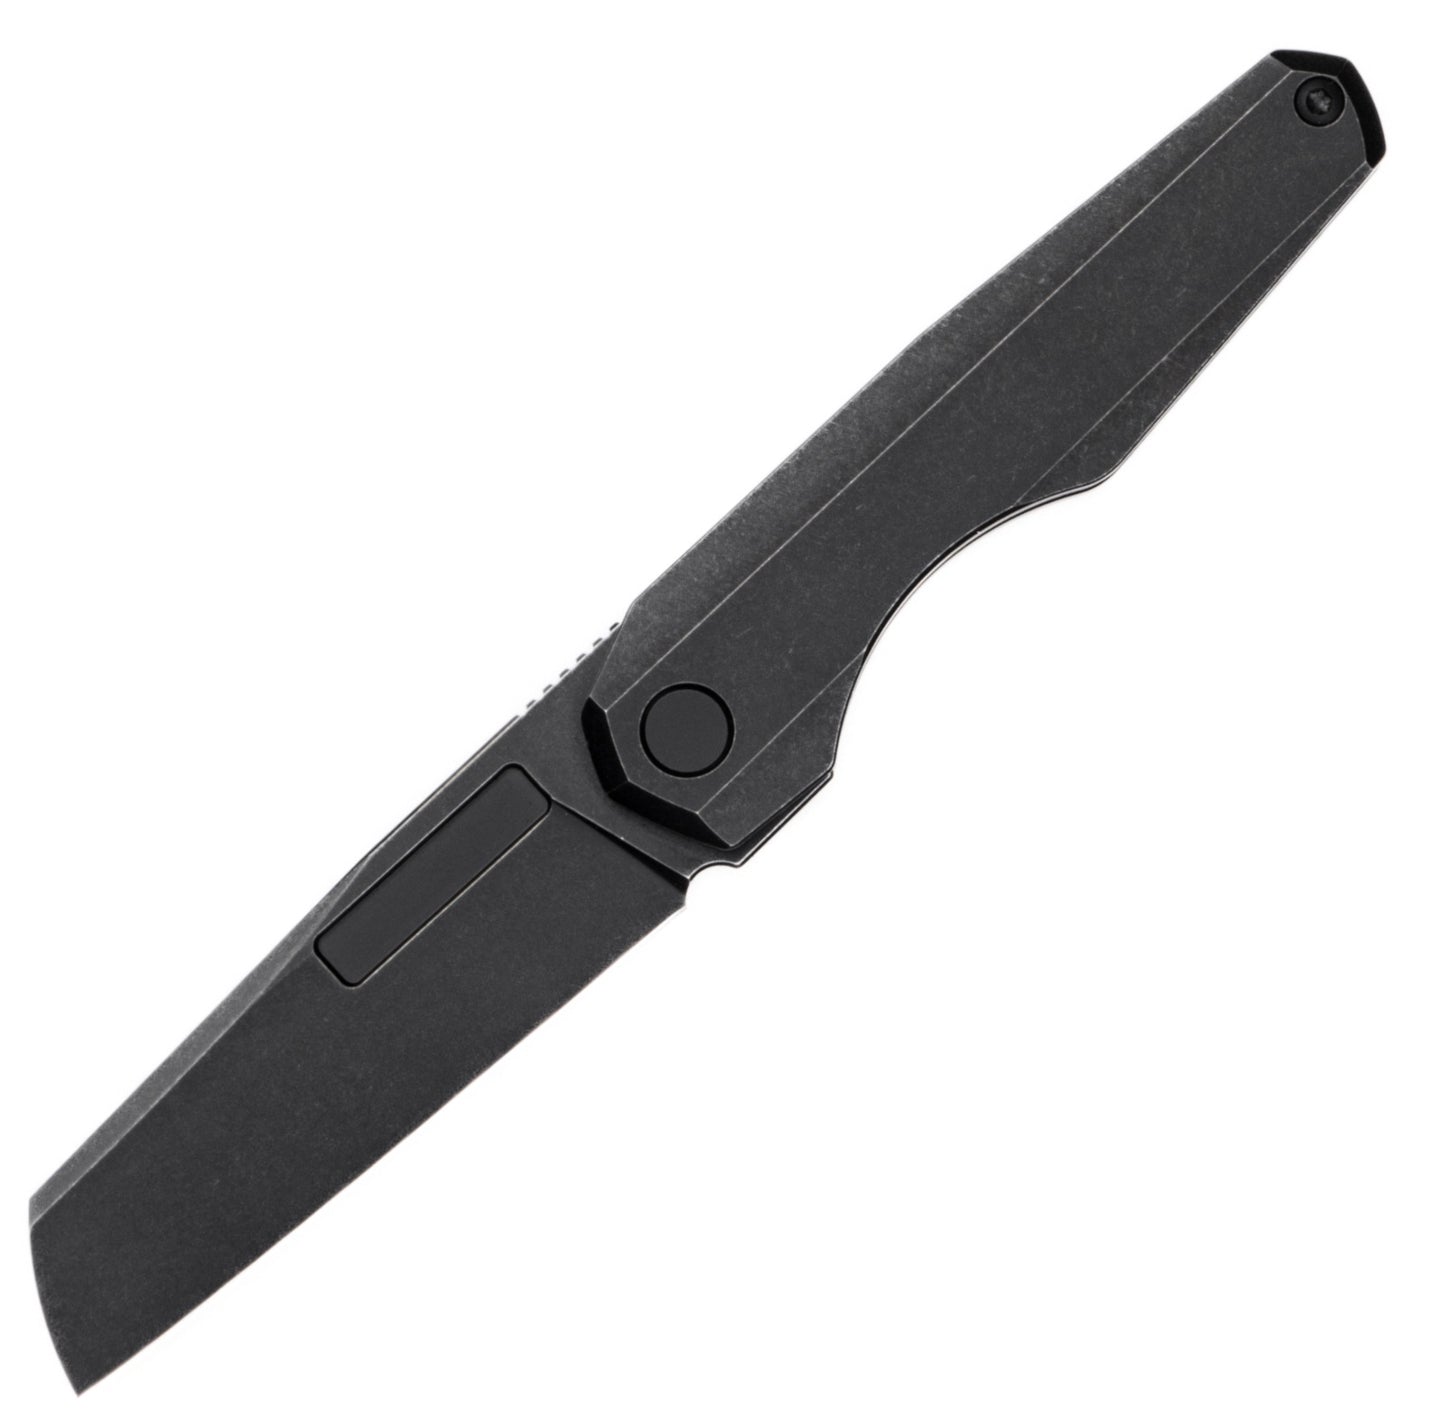 Vero Neuron, Blackwash Titanium Handles / Blackwash M390 Blade